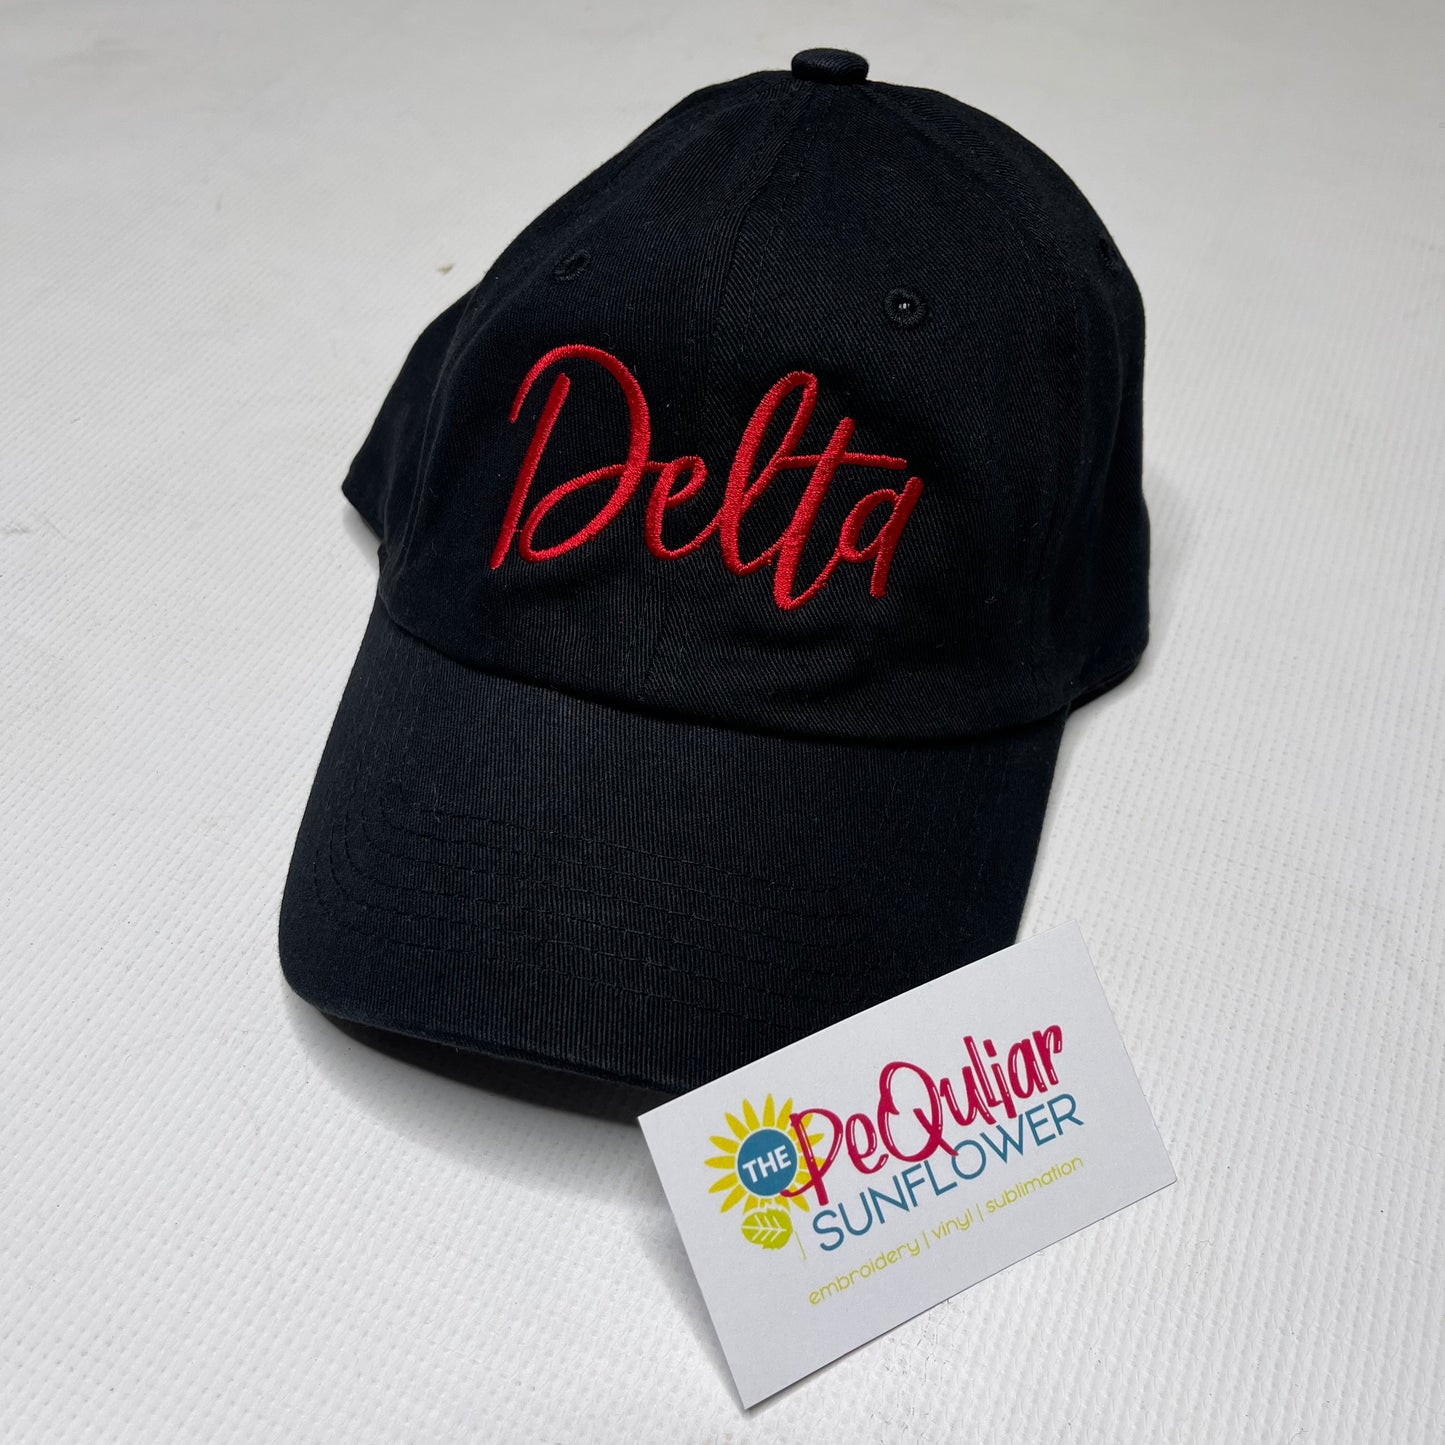 Delta hat